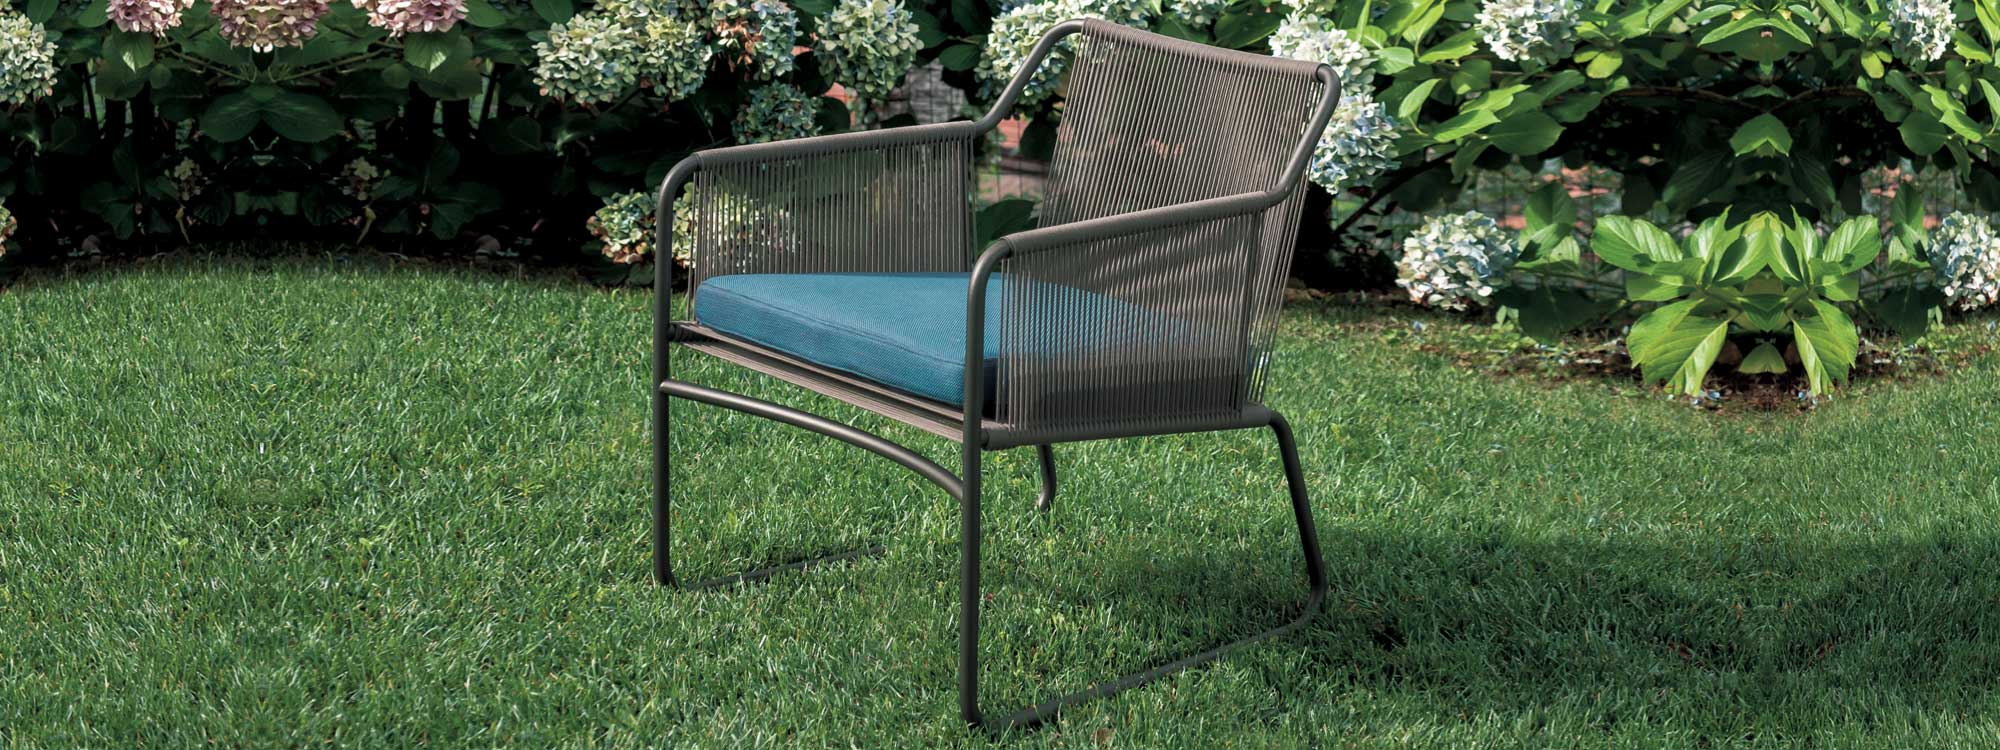 Harp modernist garden lounge chair is a minimalist outdoor relax chair in quality garden furniture materials by Roda luxury garden furniture